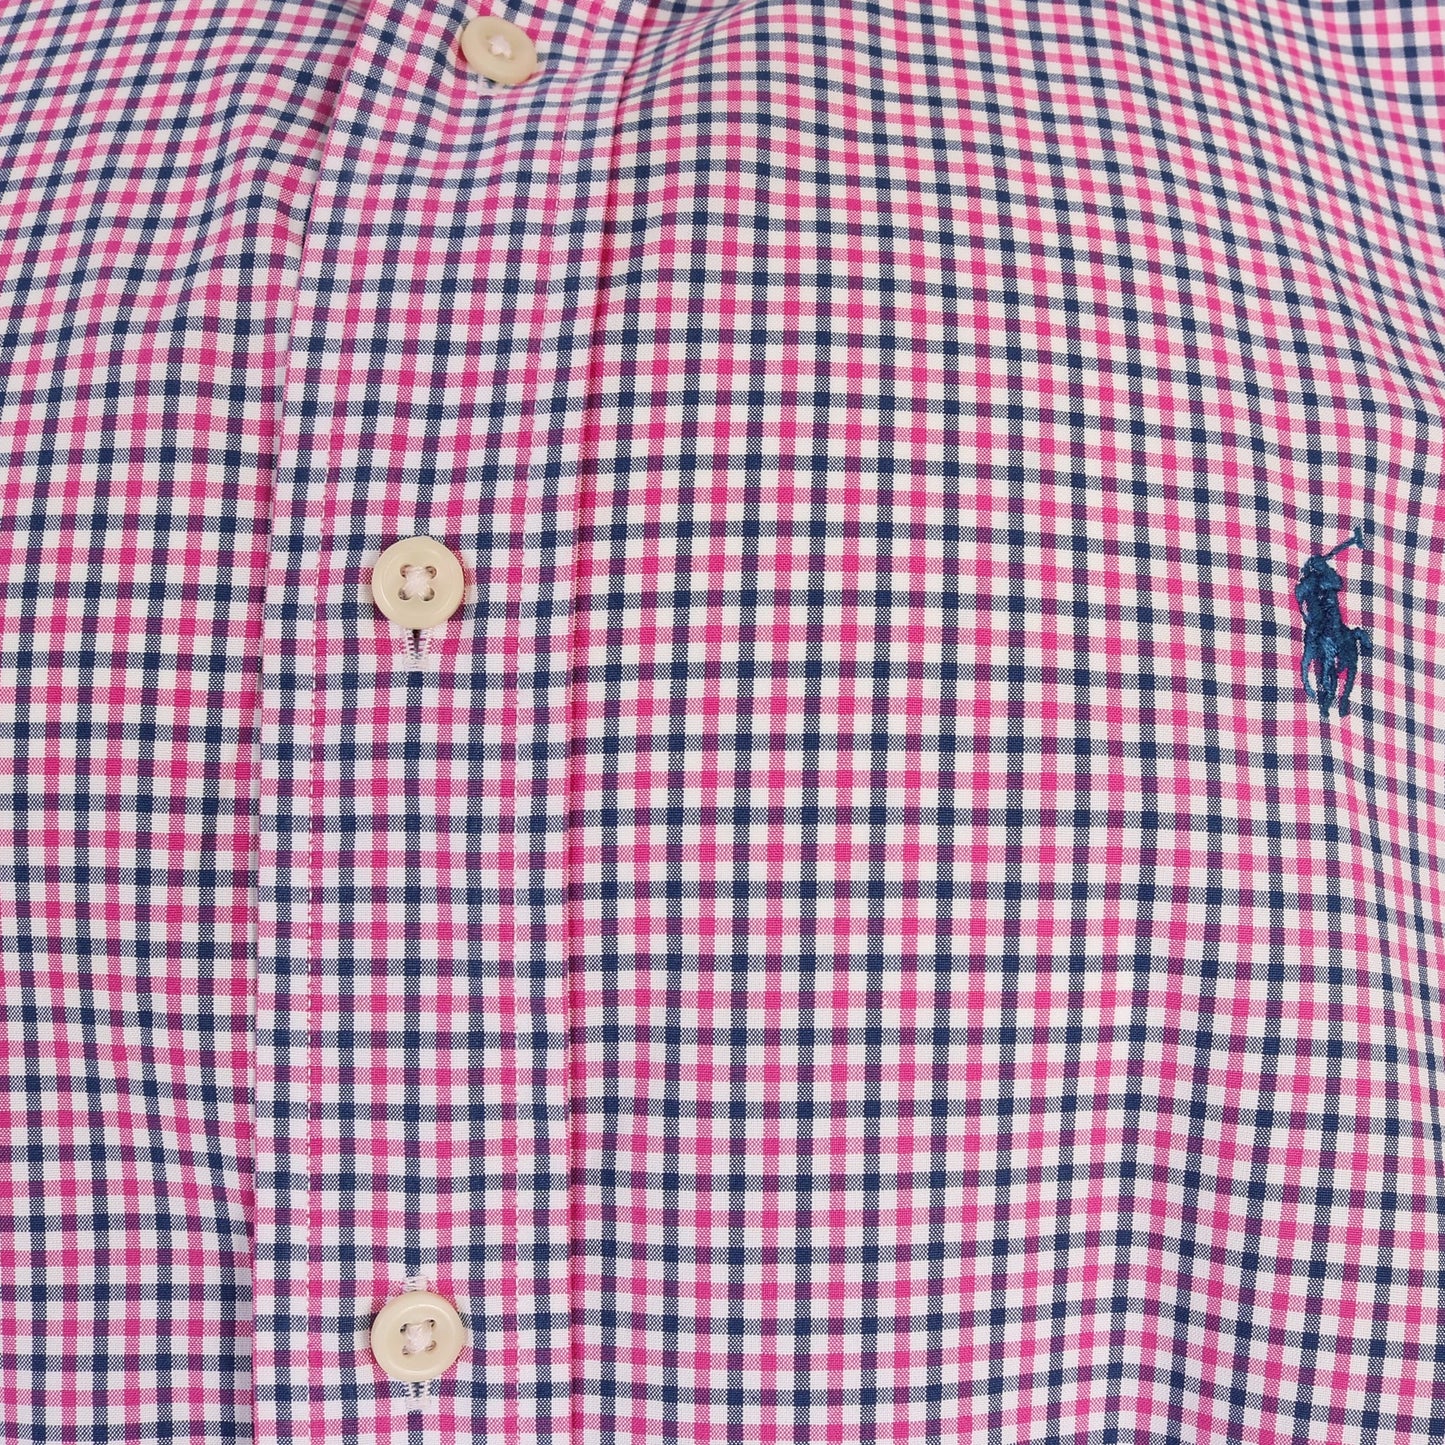 Vintage Shirt - Pink Check - American Madness